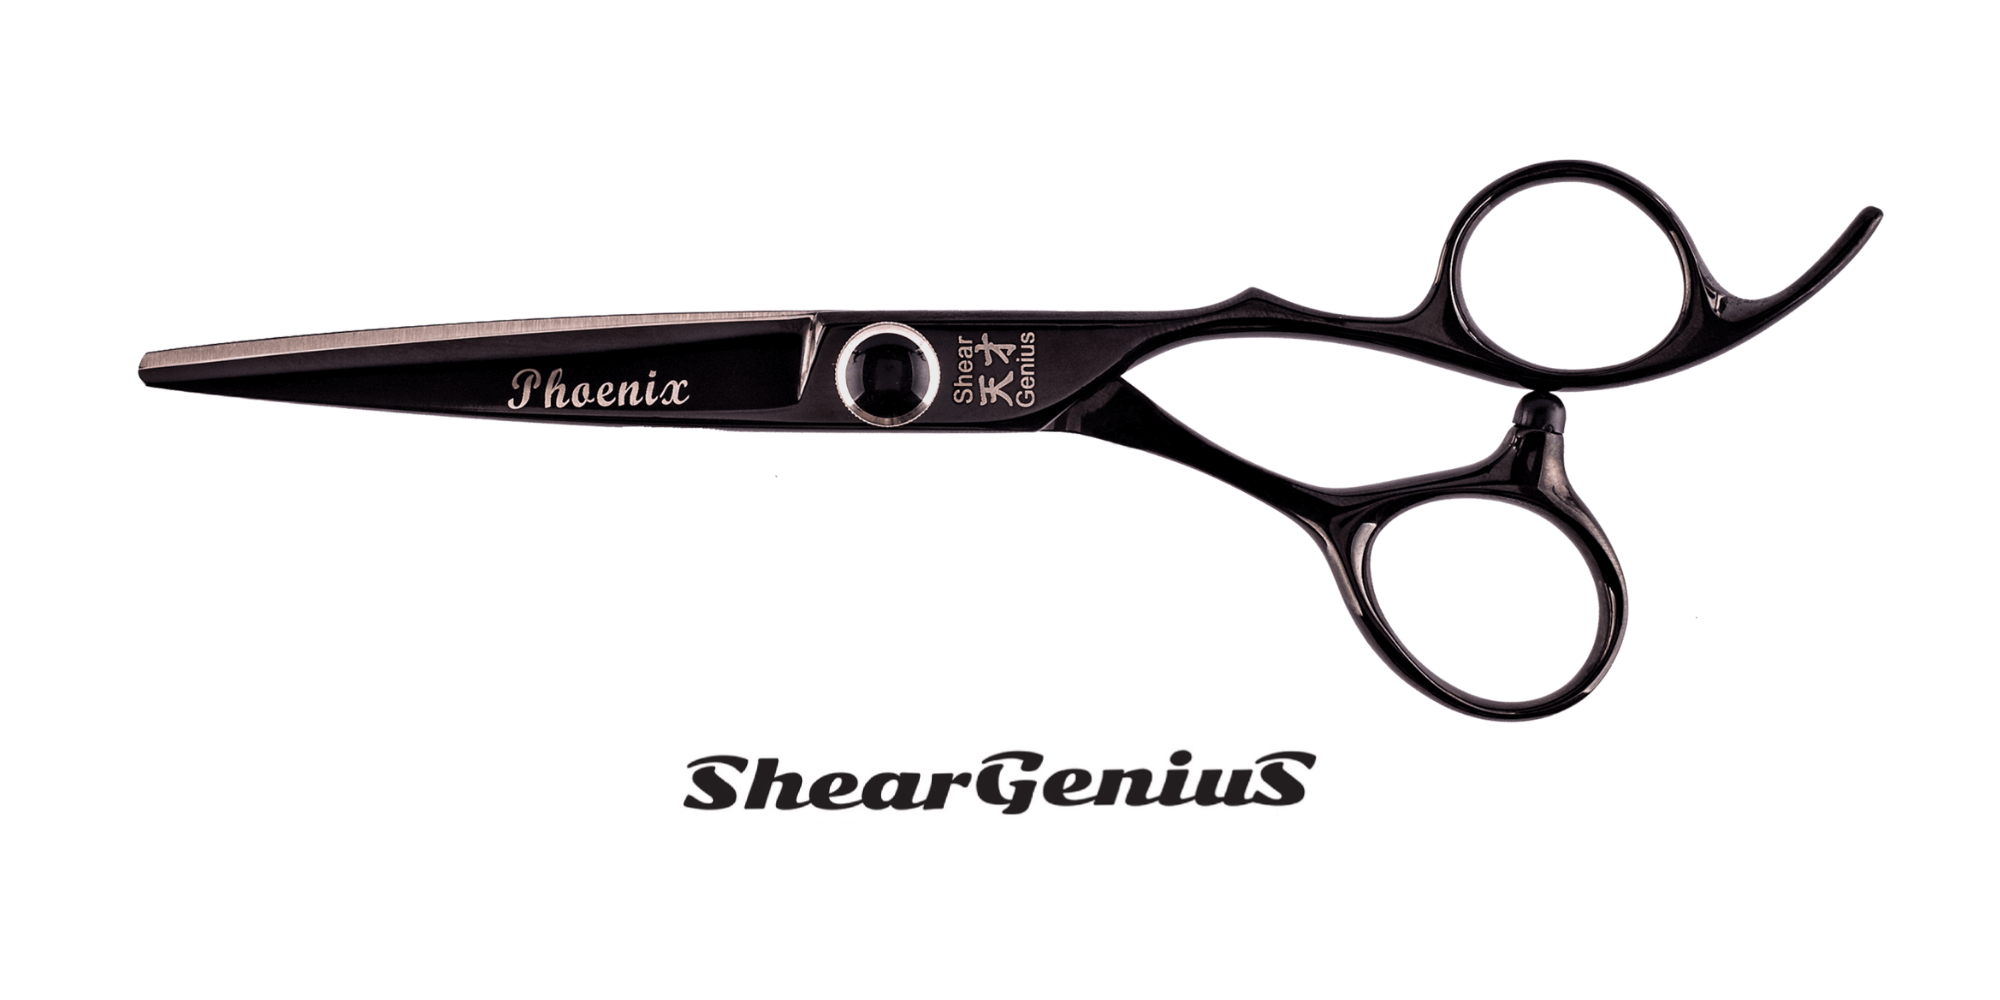 Phoenix Shears High-Quality Professional Hairdressing Scissors